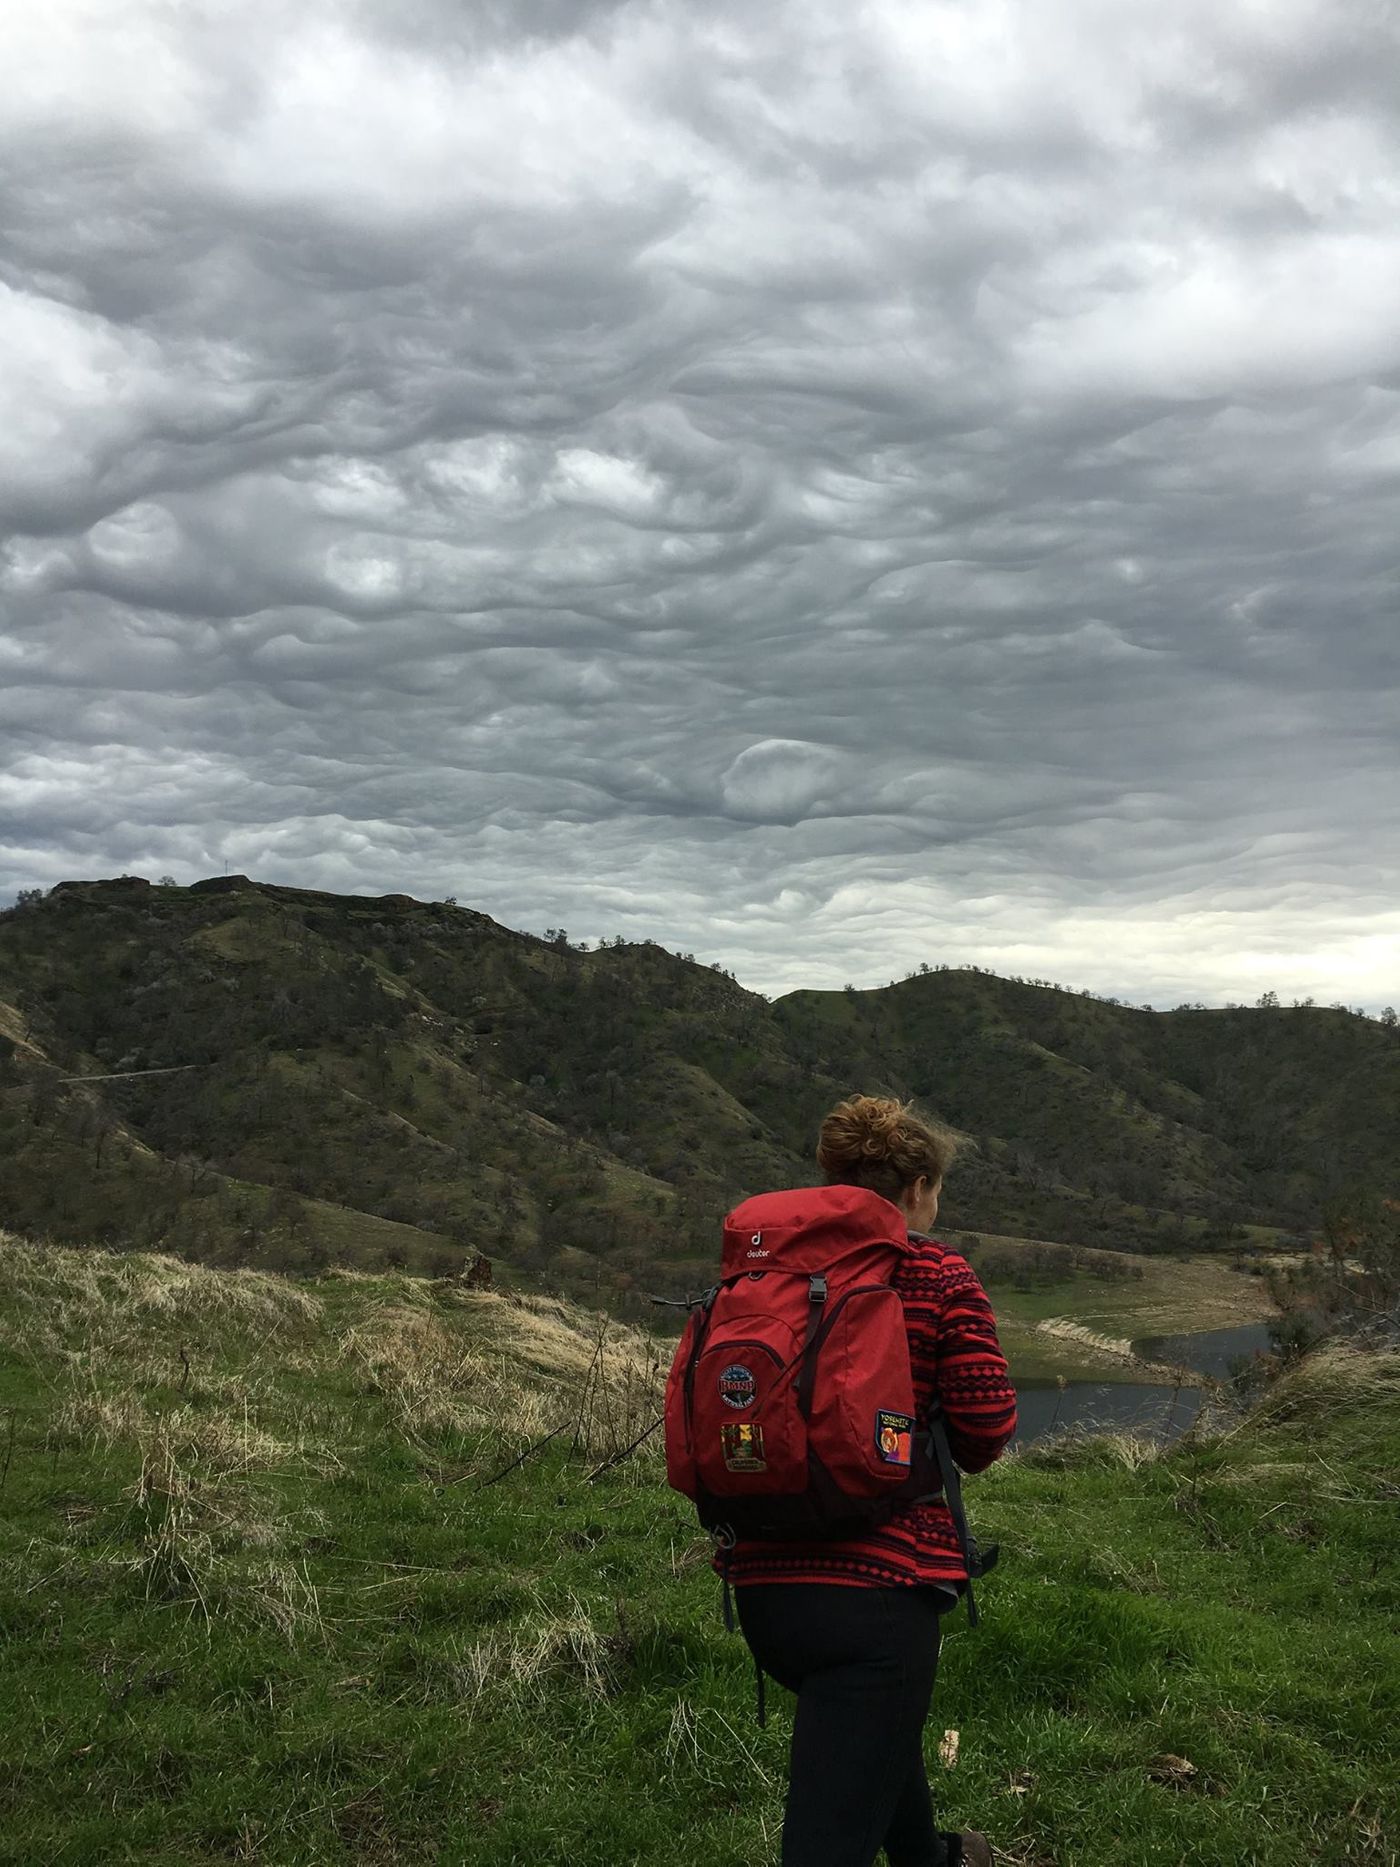 Hiking under storm clouds at Millerton Lake near Fresno, California. (Credit: Abbie Sandquist)